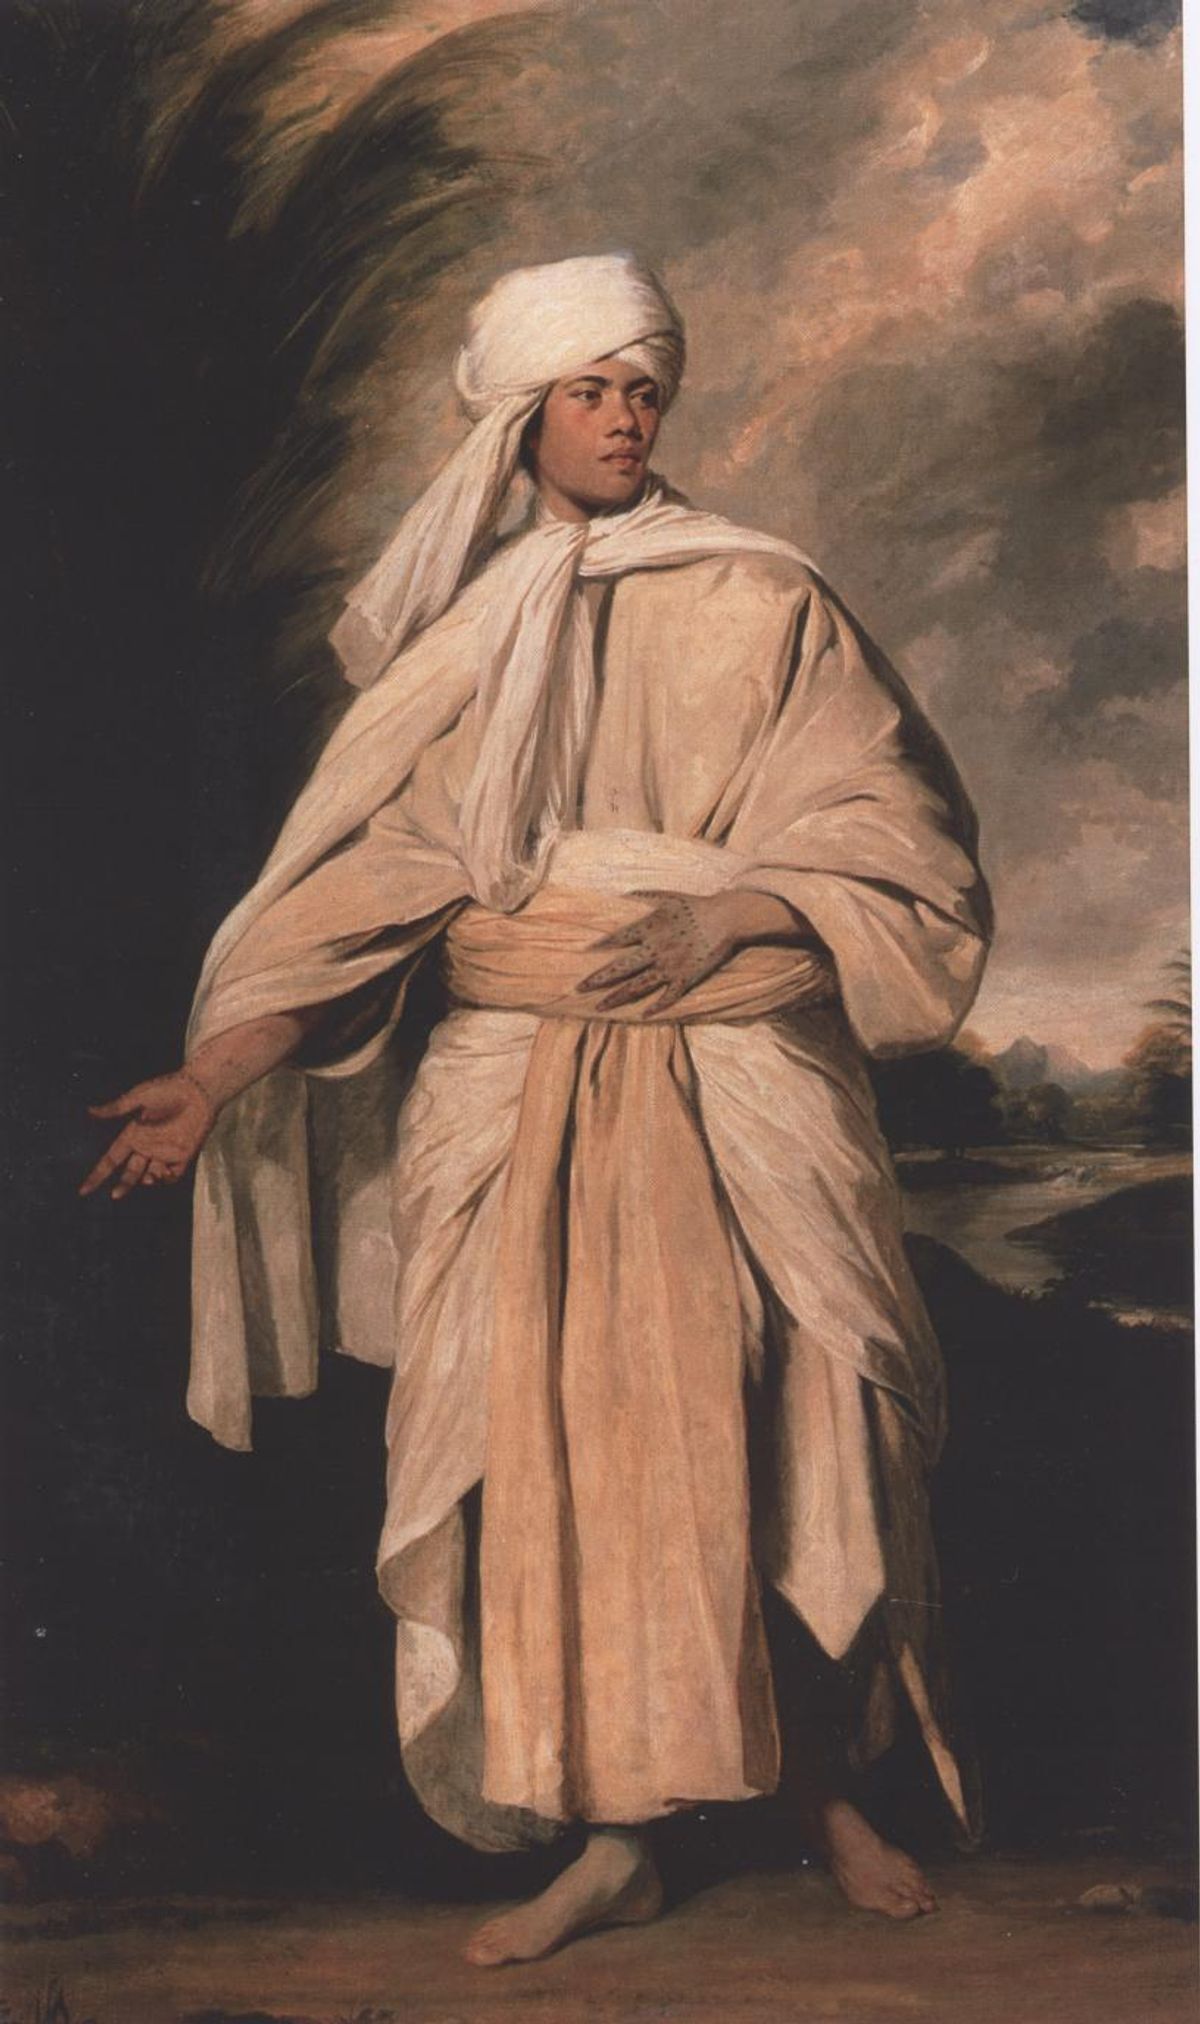 Joshua Reynolds's Portrait of Omai (1776)